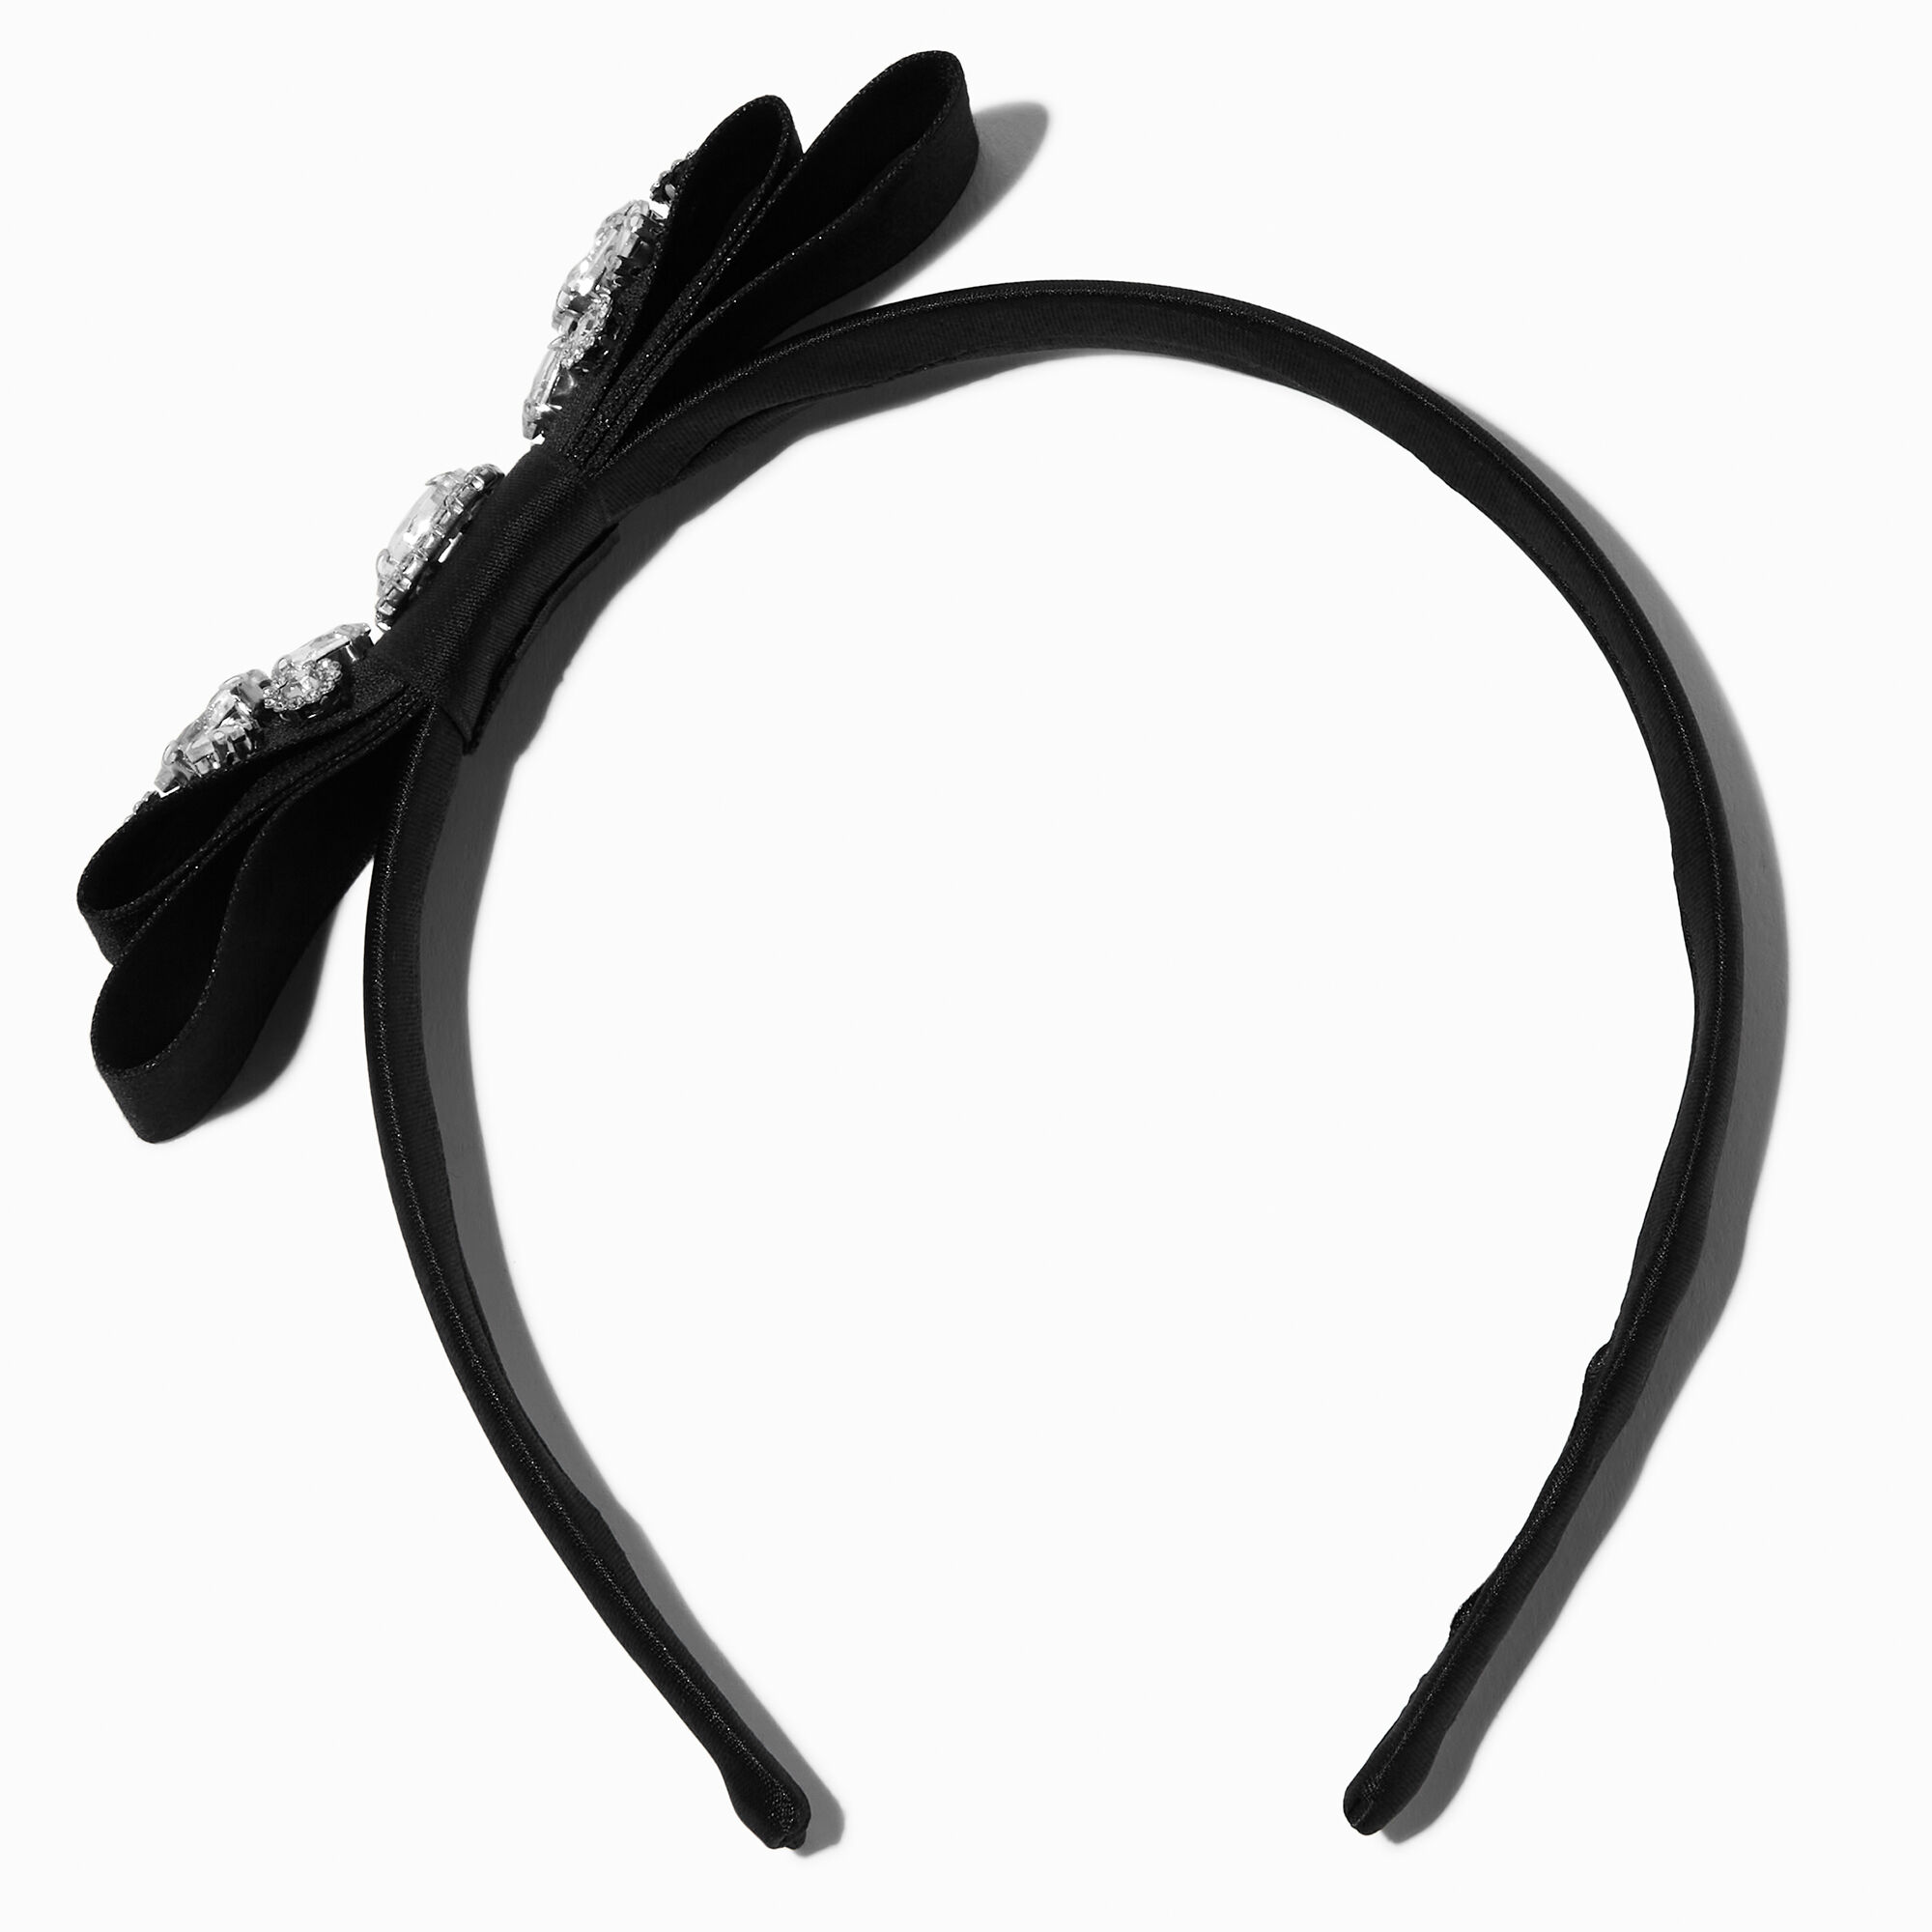 View Claires Rhinestone Embellished Bow Headband Black information